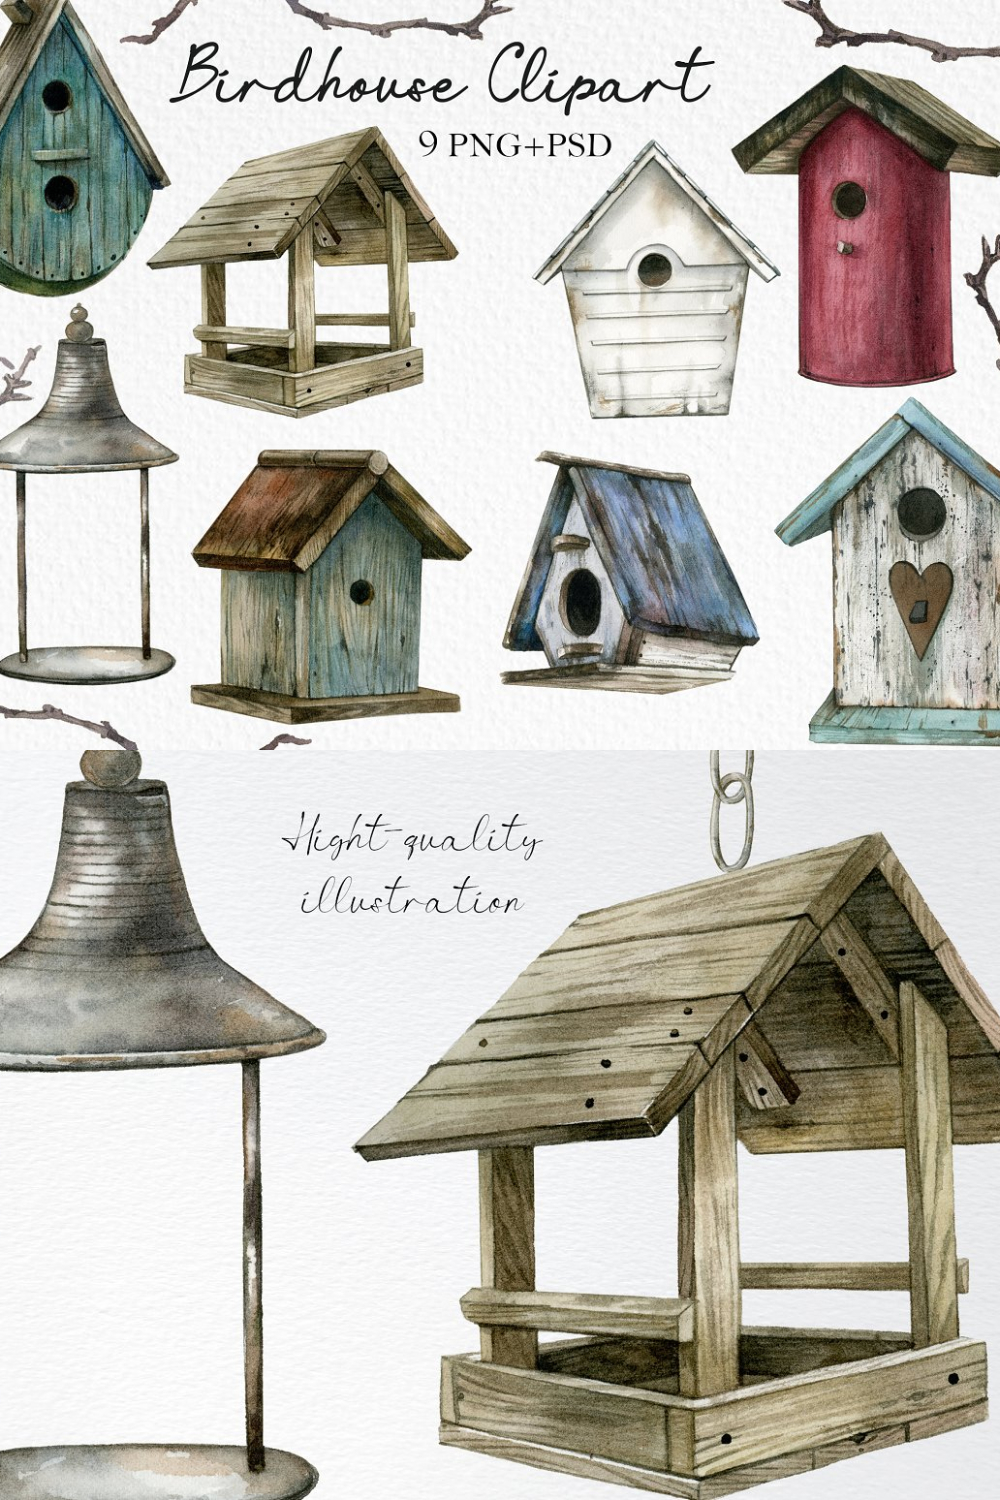 Watercolor Rustic Birdhouse Clipart - Pinterest.